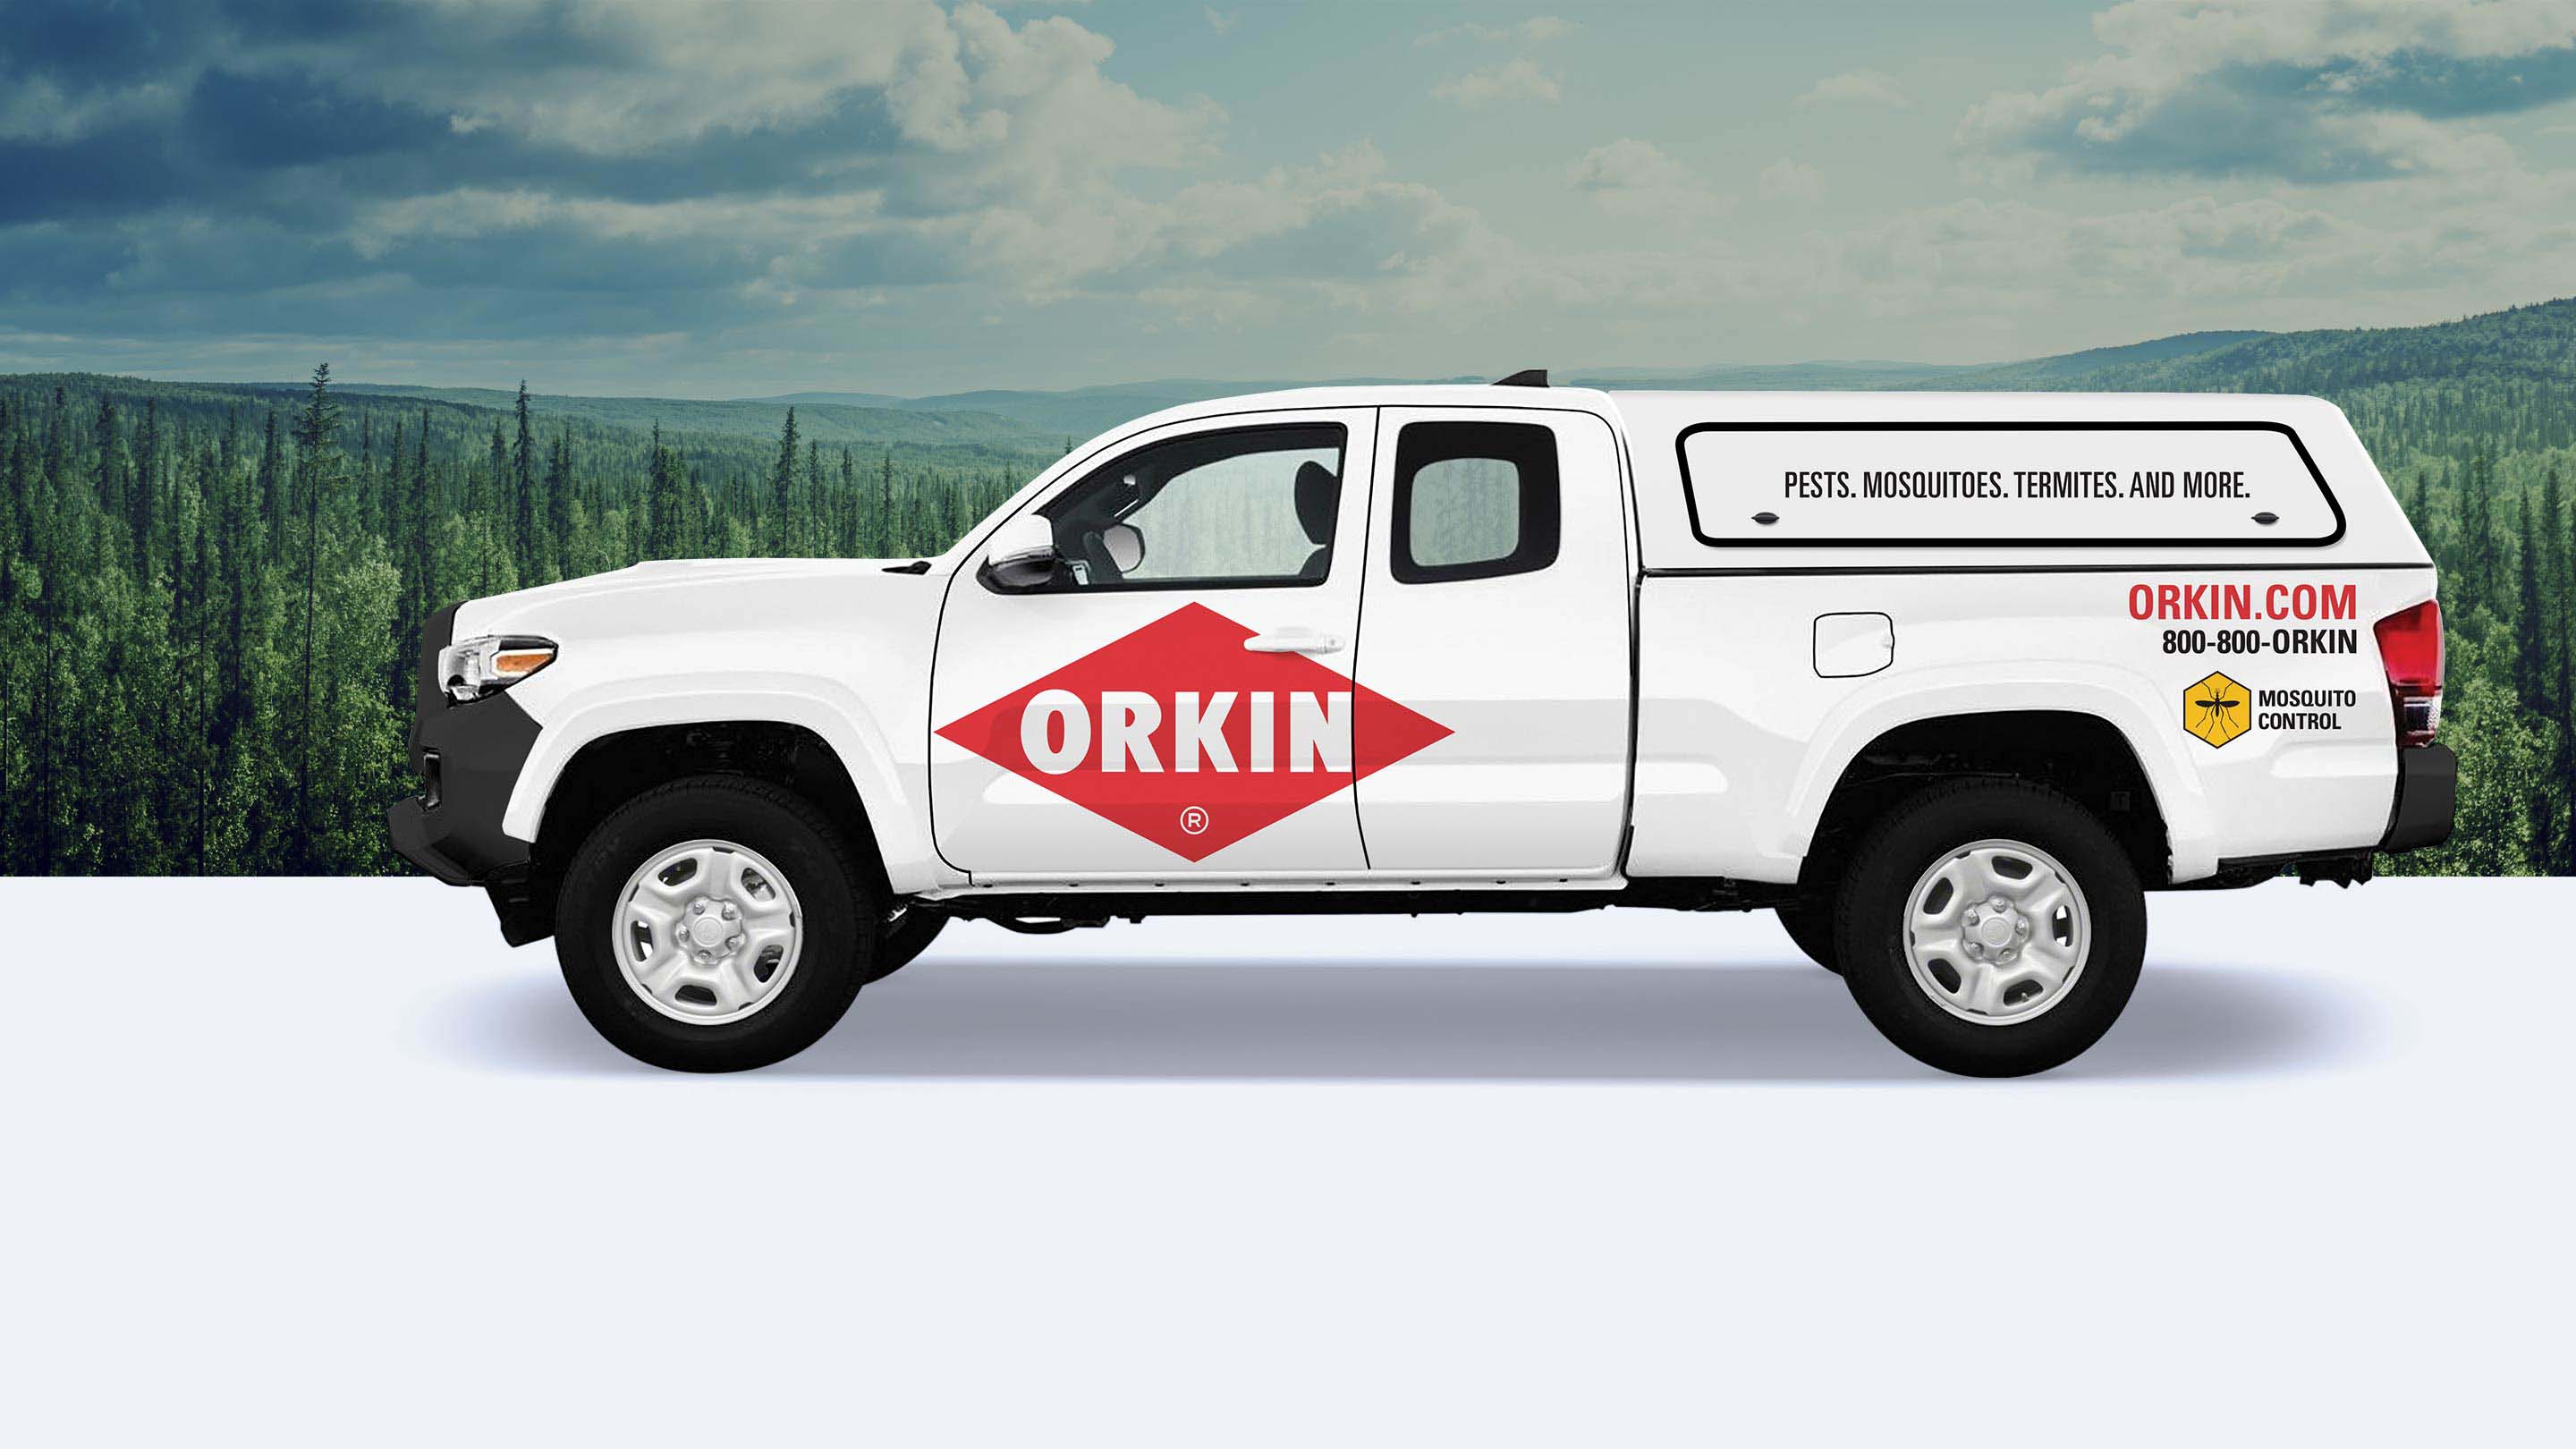 White van with Orkin logo on it